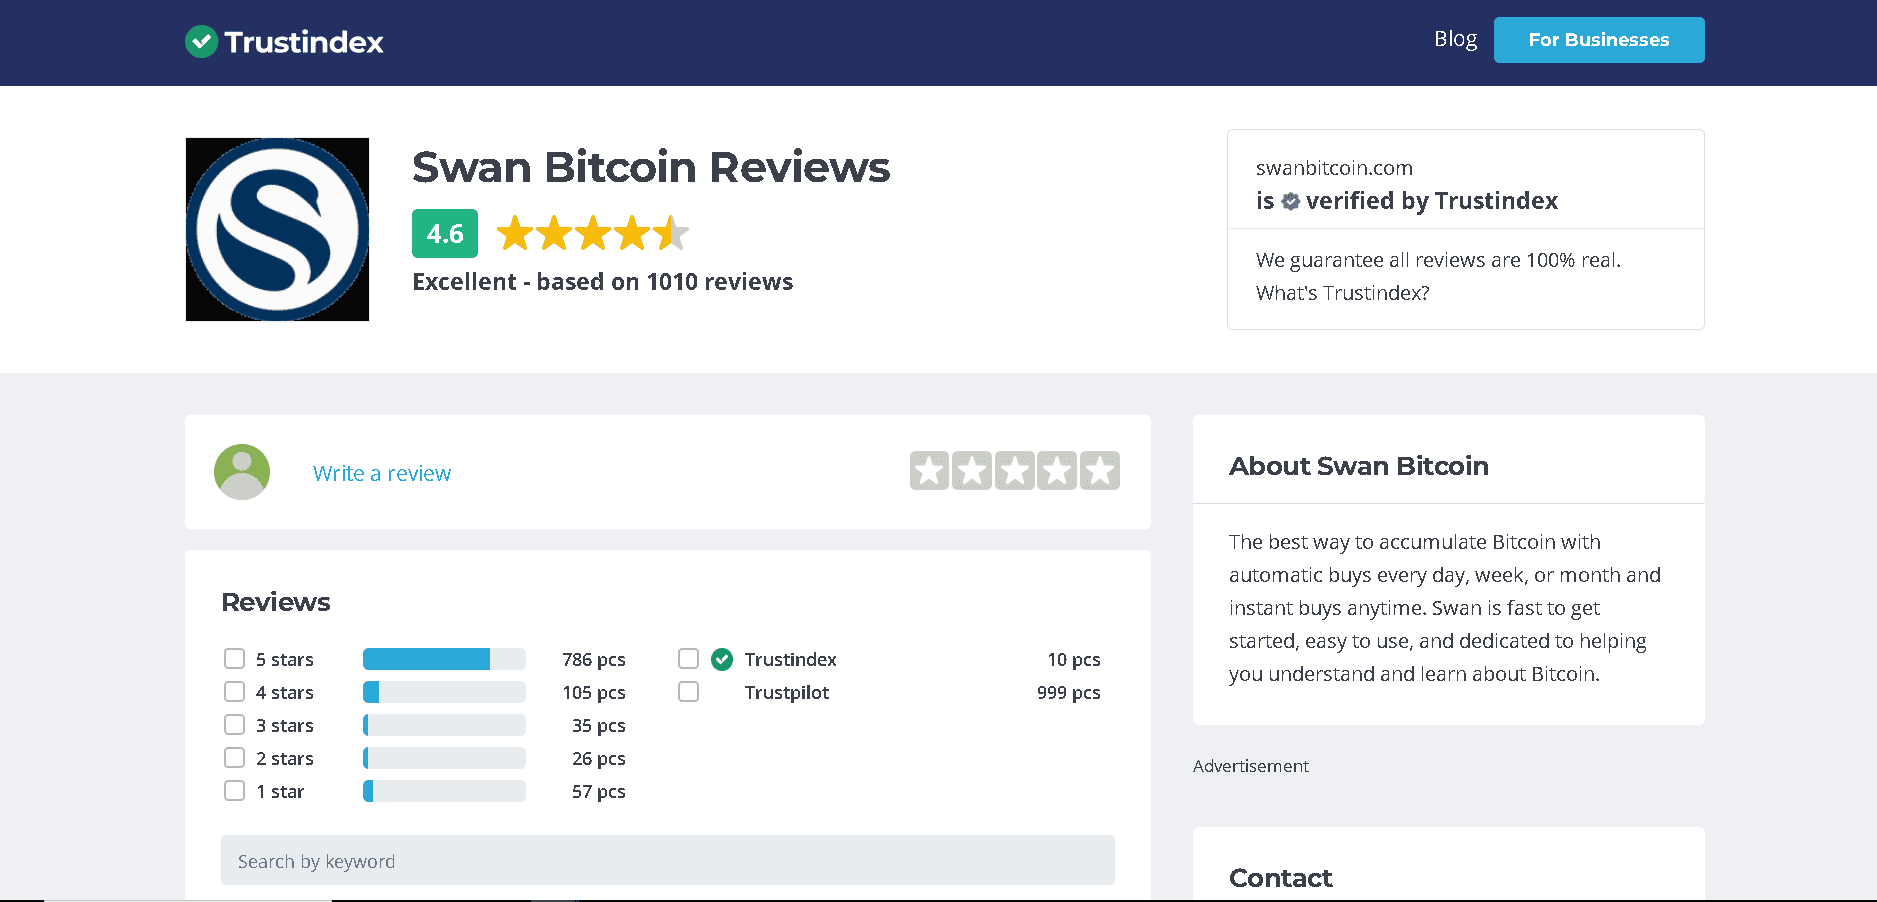 Swan Bitcoin Trustindex profile and customer reviews